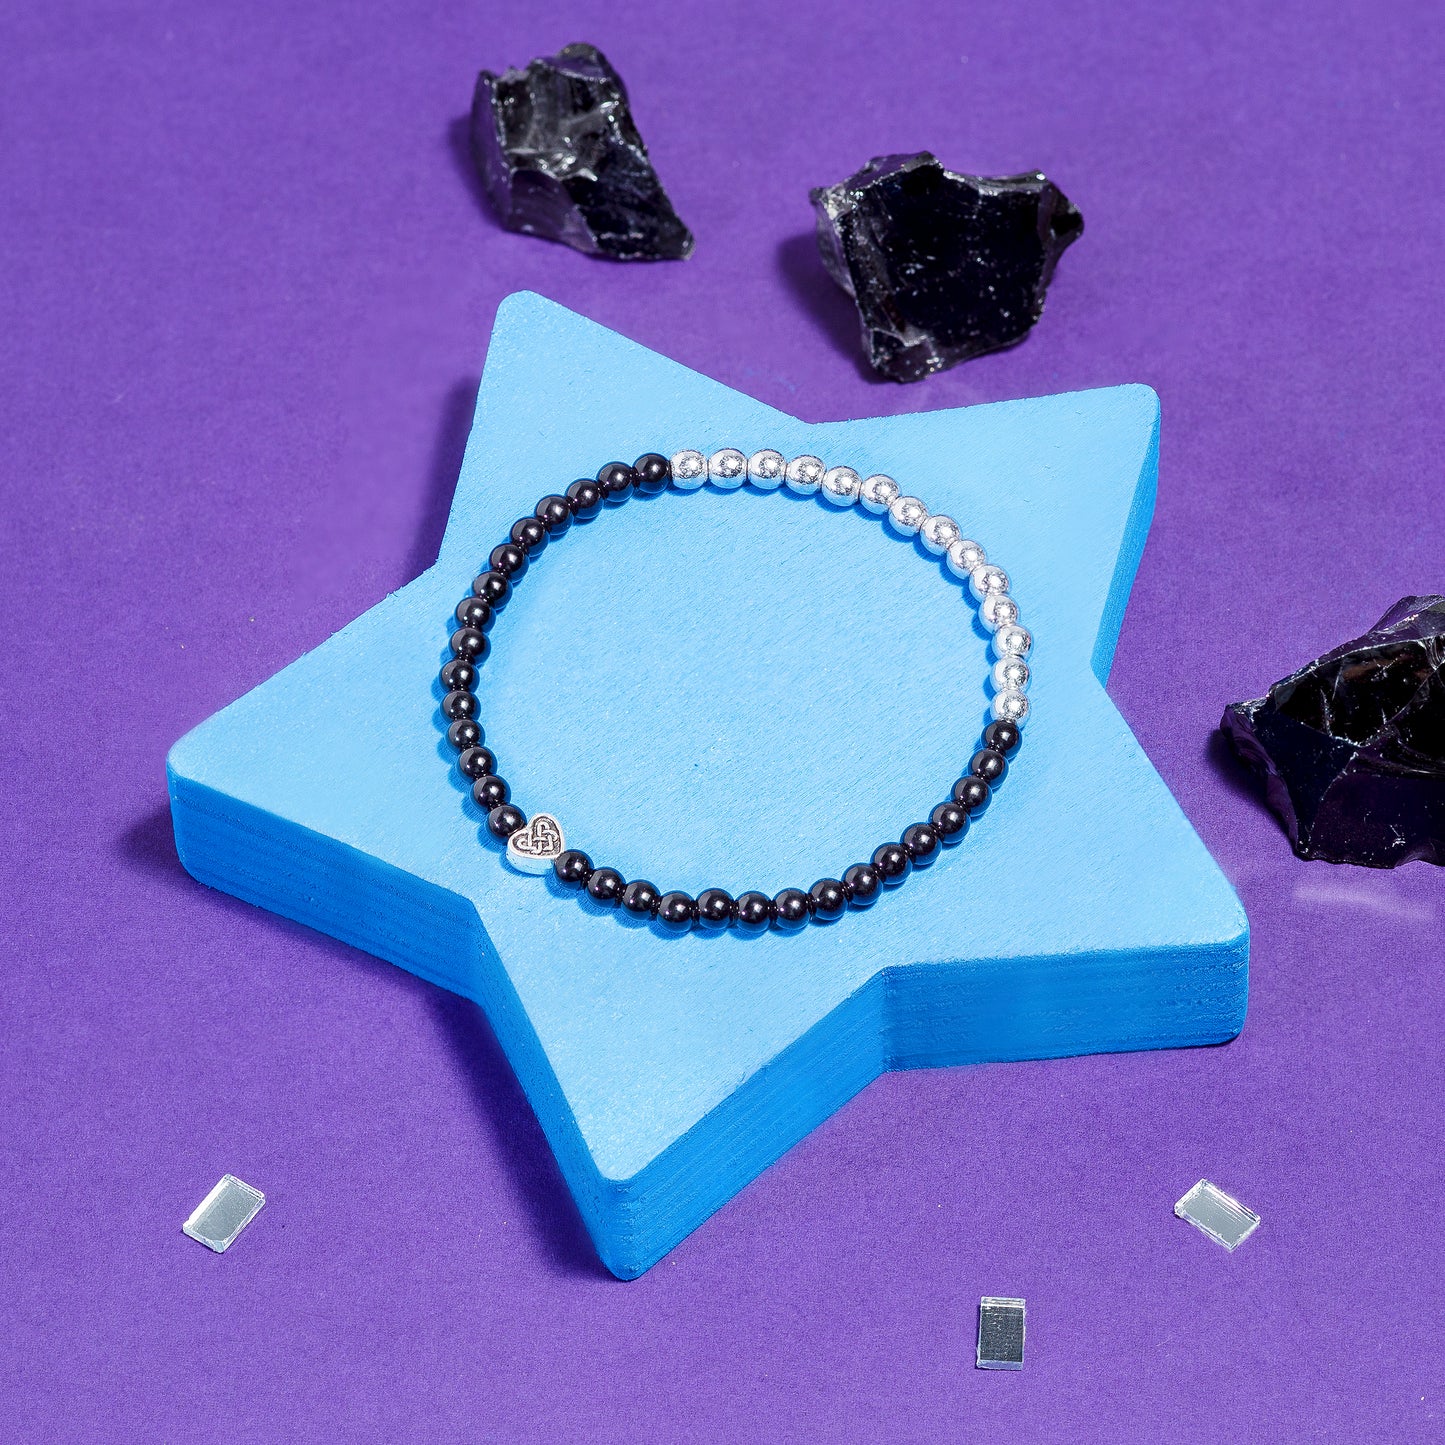 Obsidian & Hematite Mini Gemstone Bracelet II